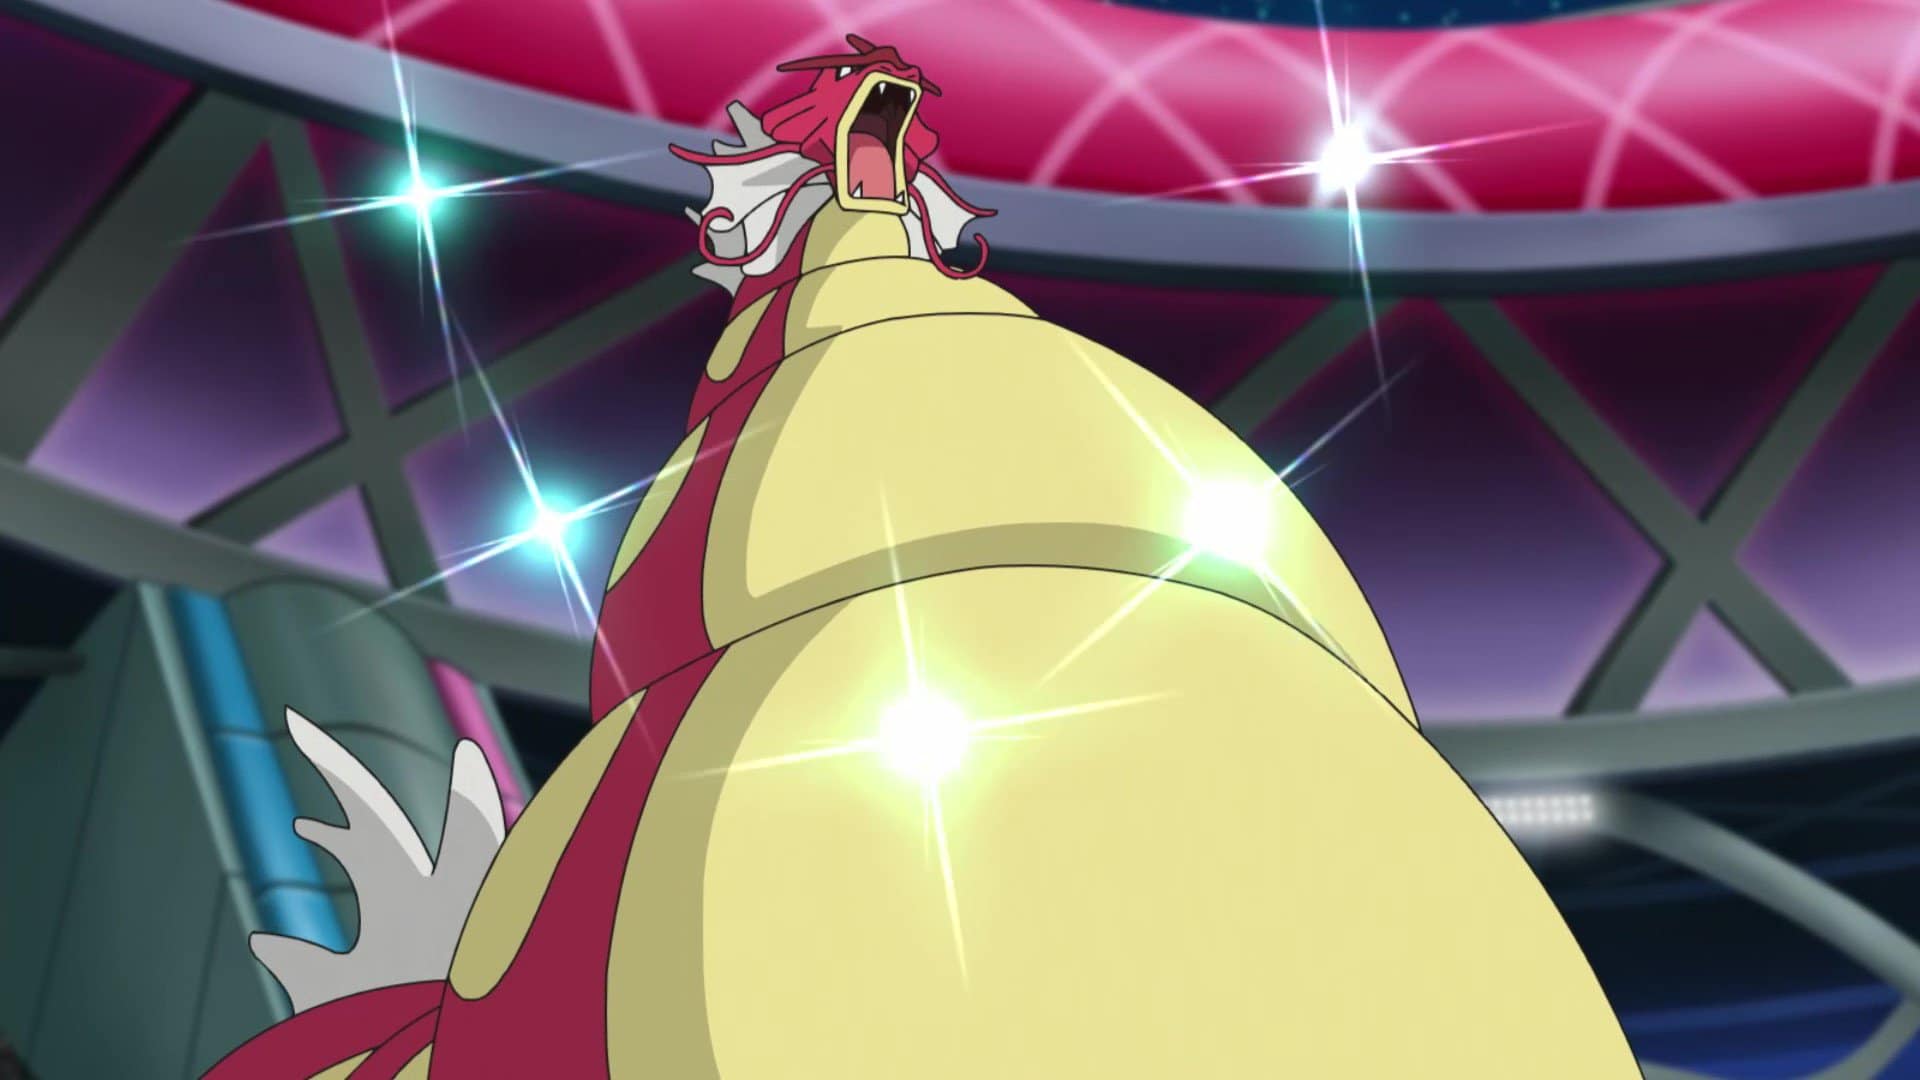 La misteriosa silueta del anime de Pokémon era este Gyarados variocolor visto desde abajo